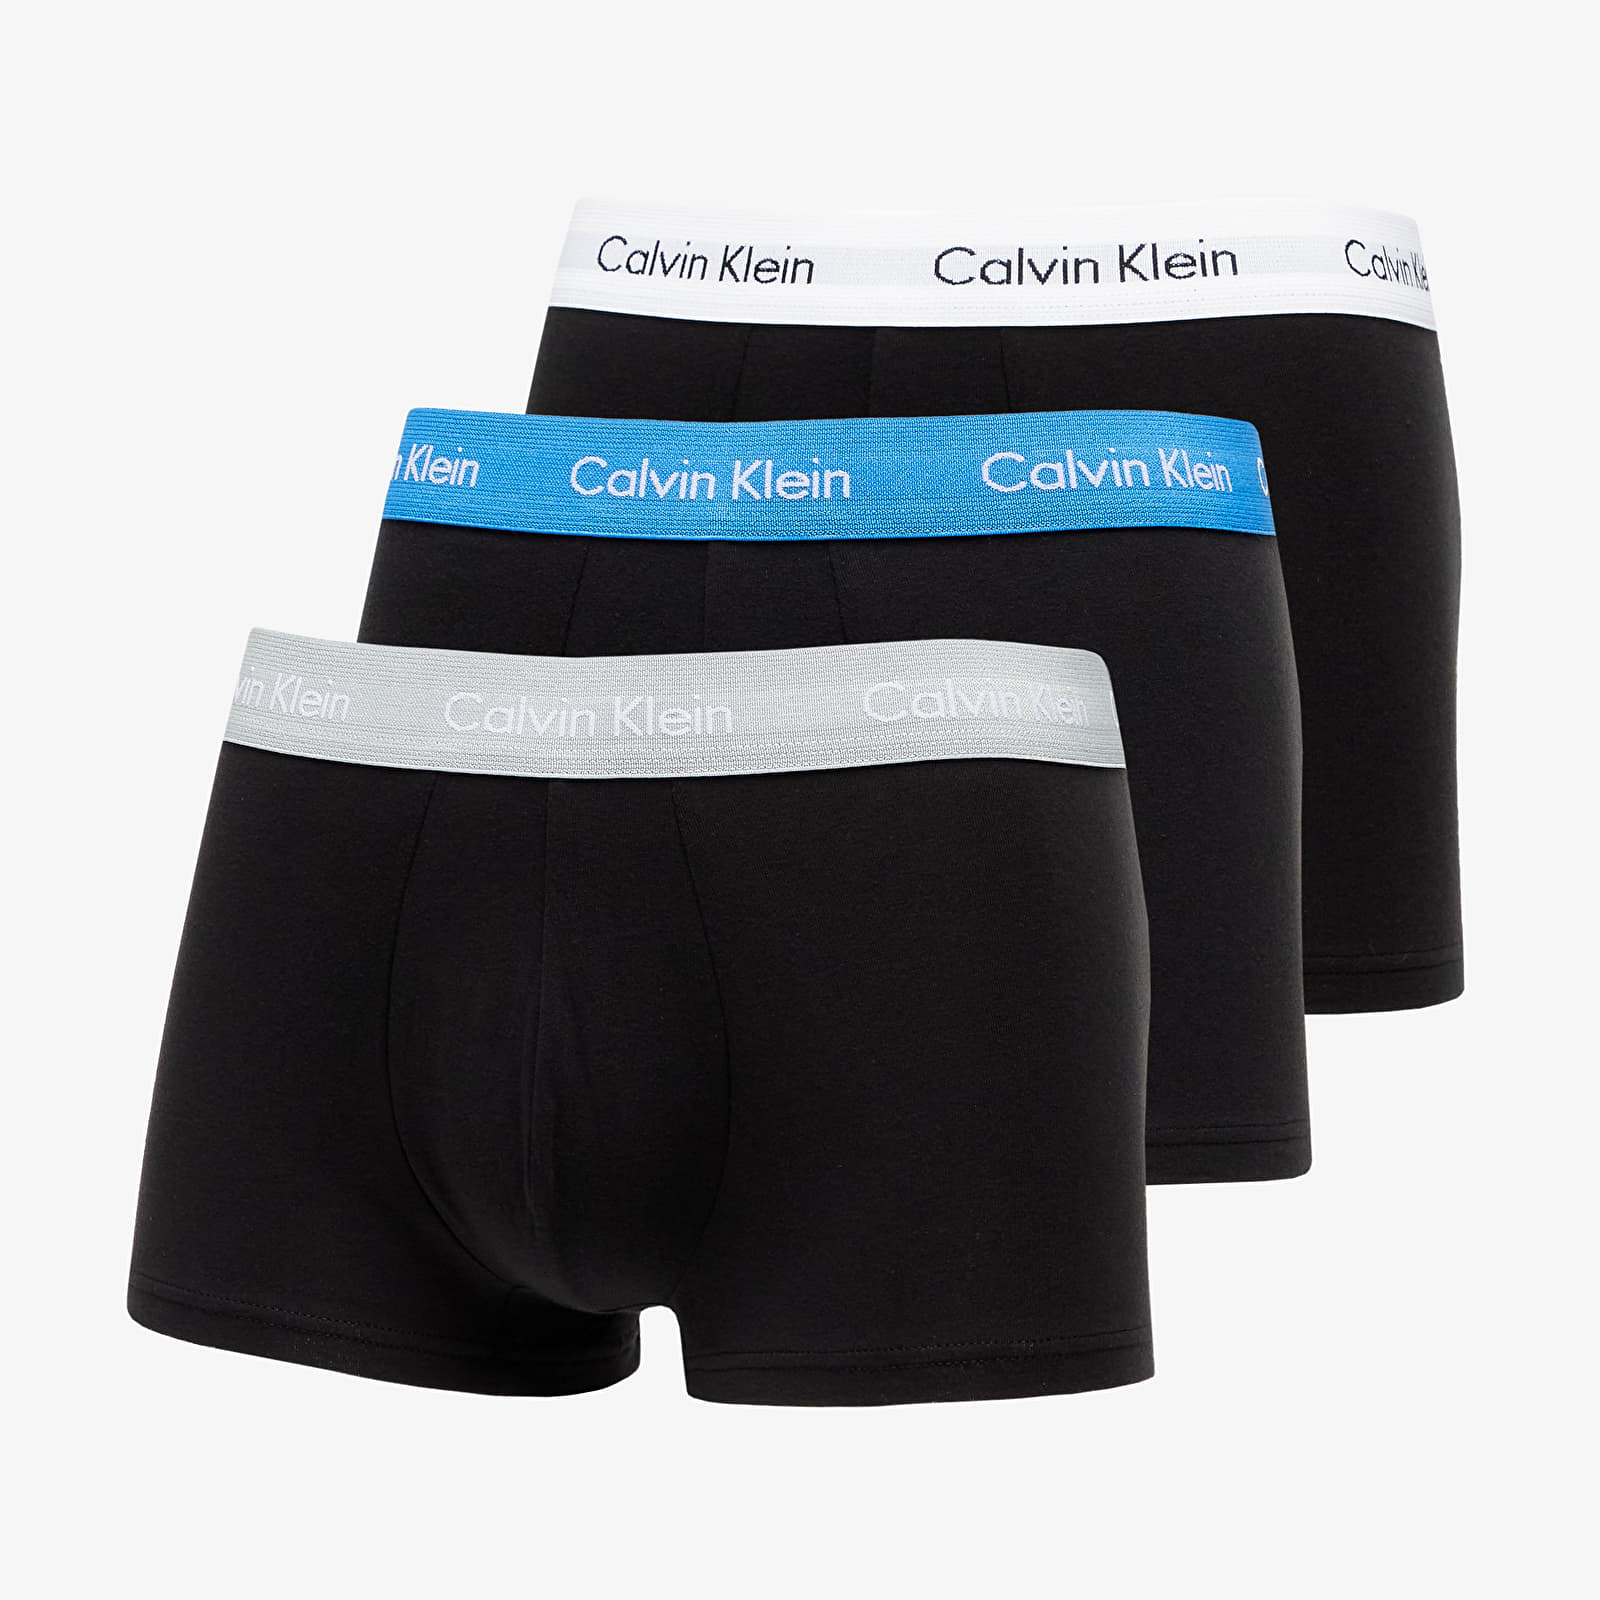 Boxeri Calvin Klein Cotton Stretch Low Rise Trunk 3 Pack Black/ Grey Heather/ White/ Palace Blue WB